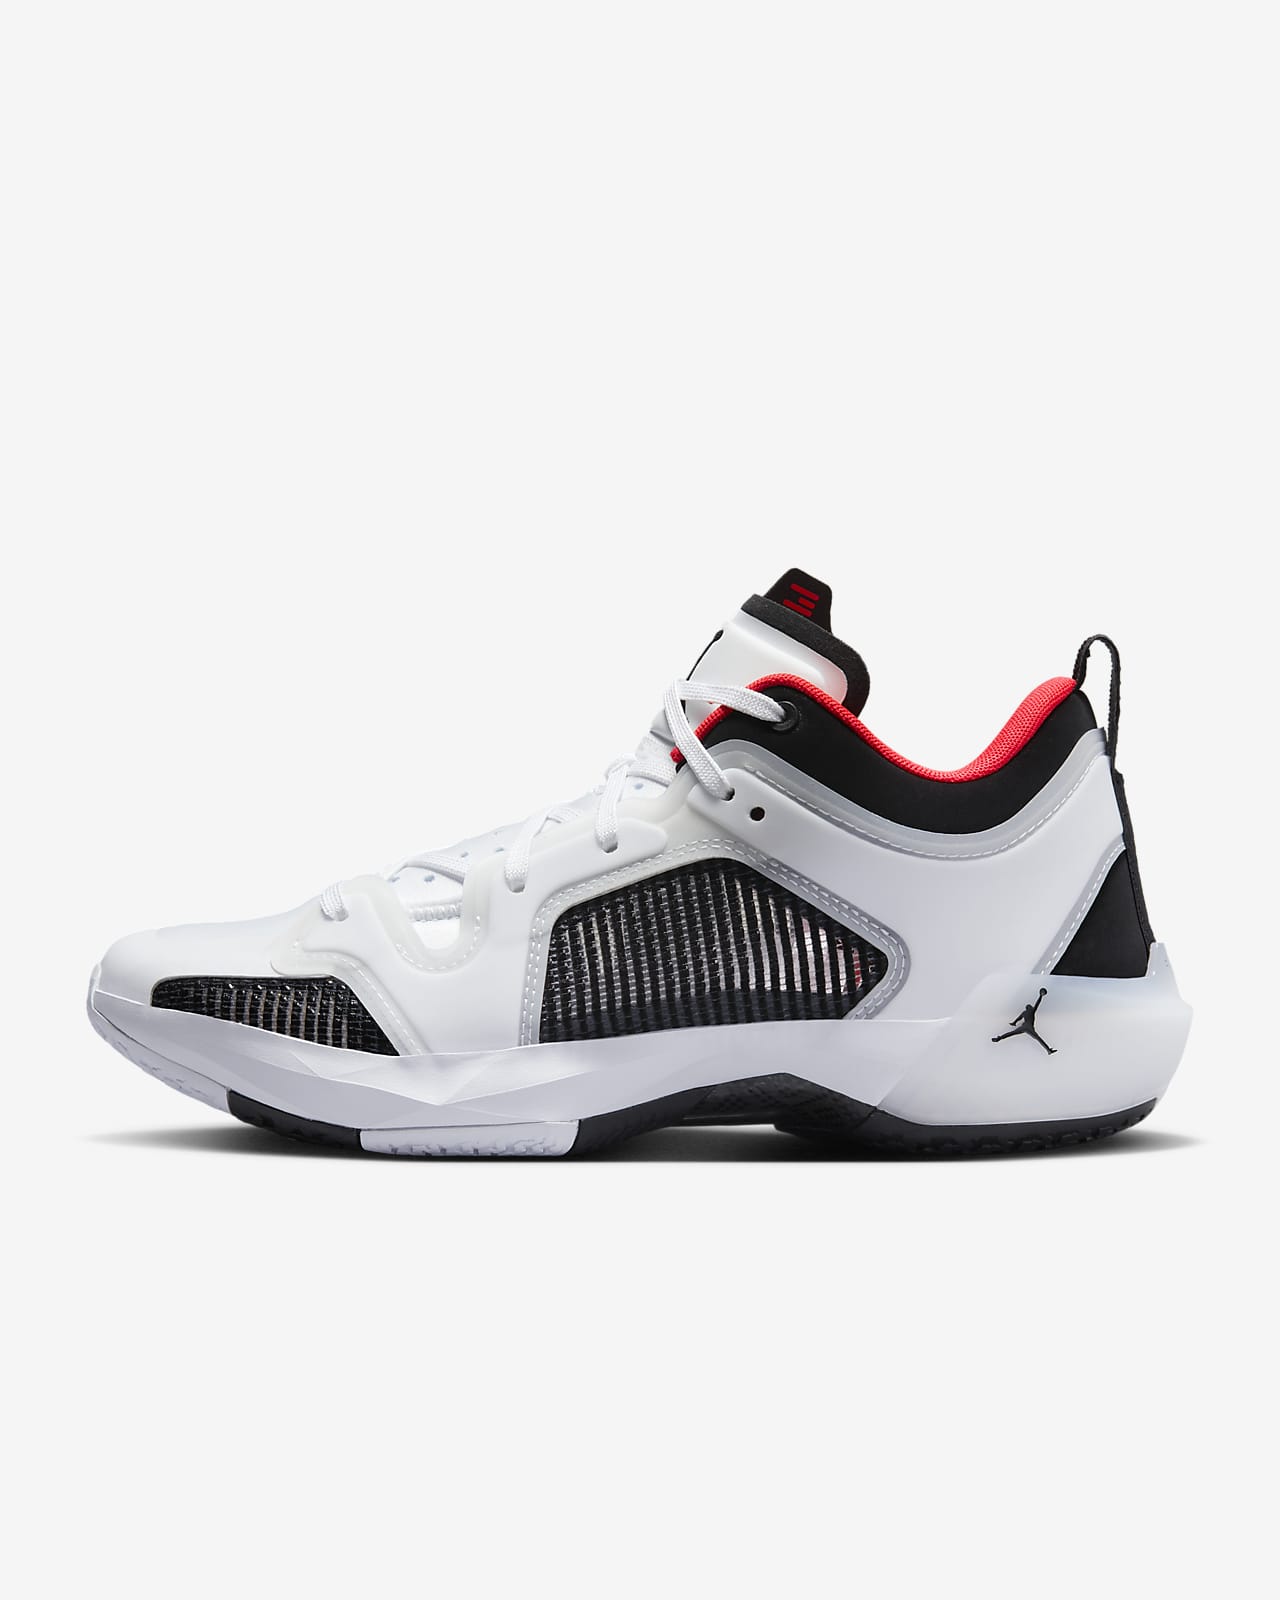 Air Jordan XXXVII Low Men's Basketball Shoes